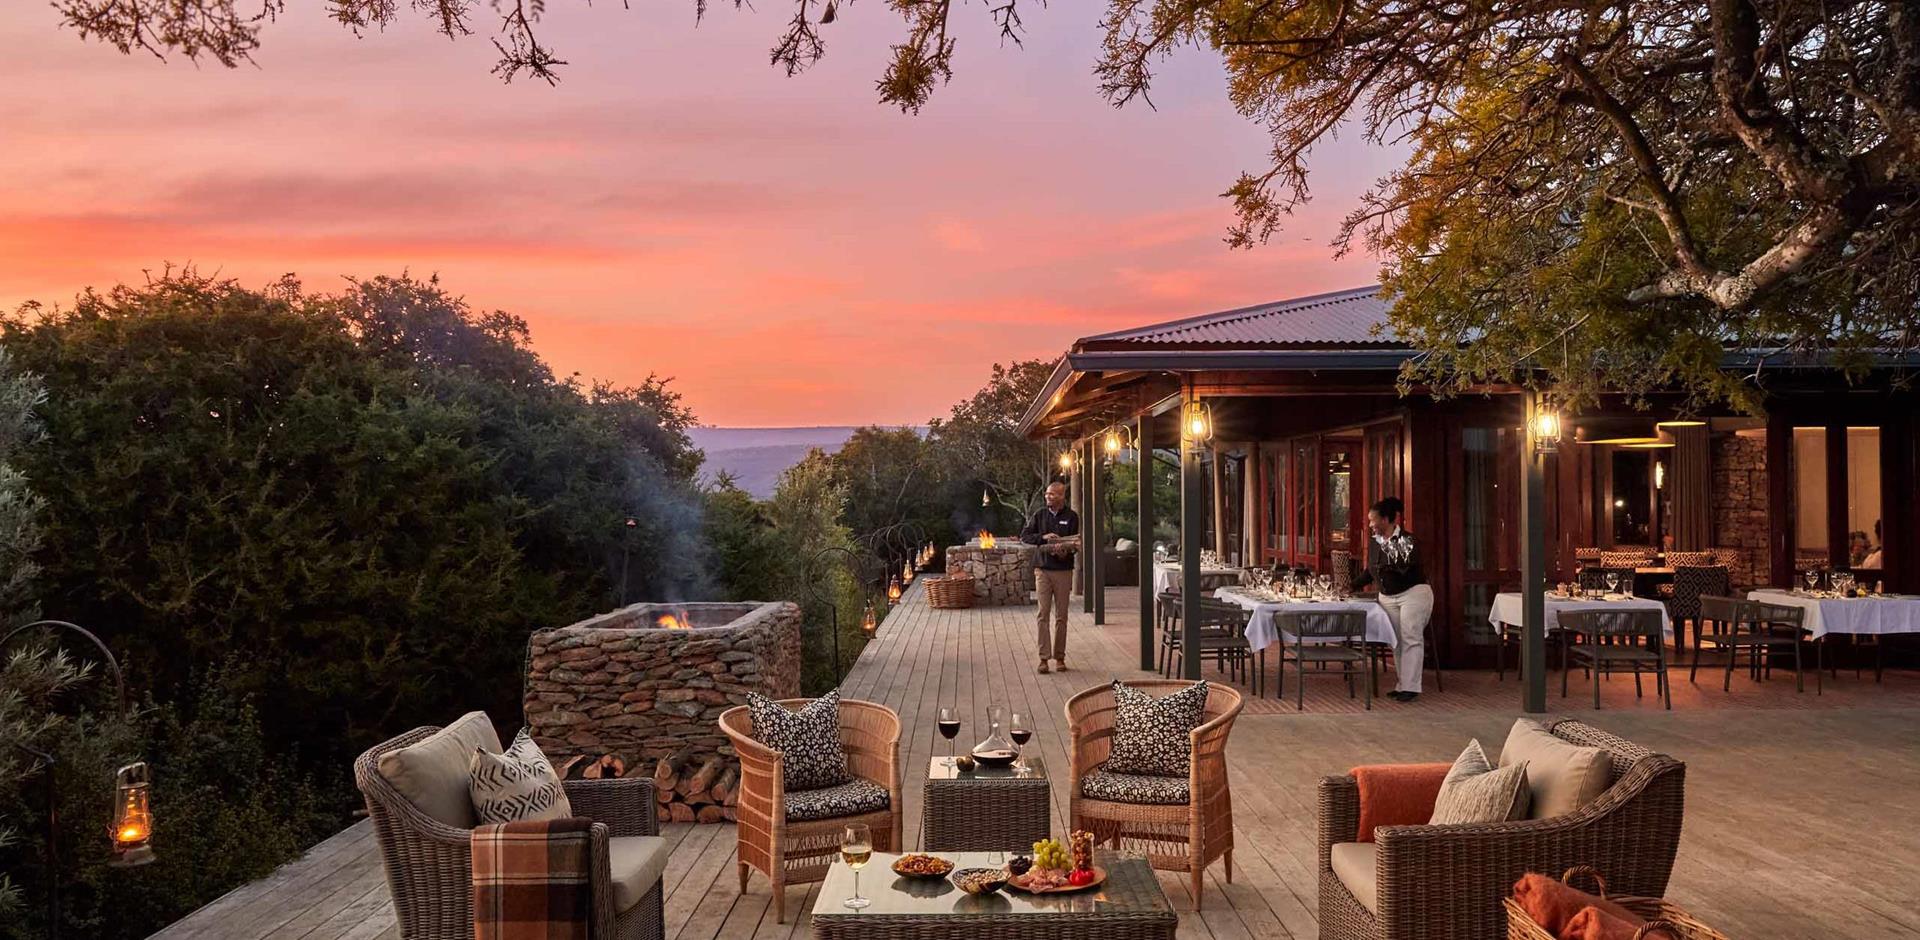 Sunset on the terrace, Kwandwe Ecca Lodge, South Africa